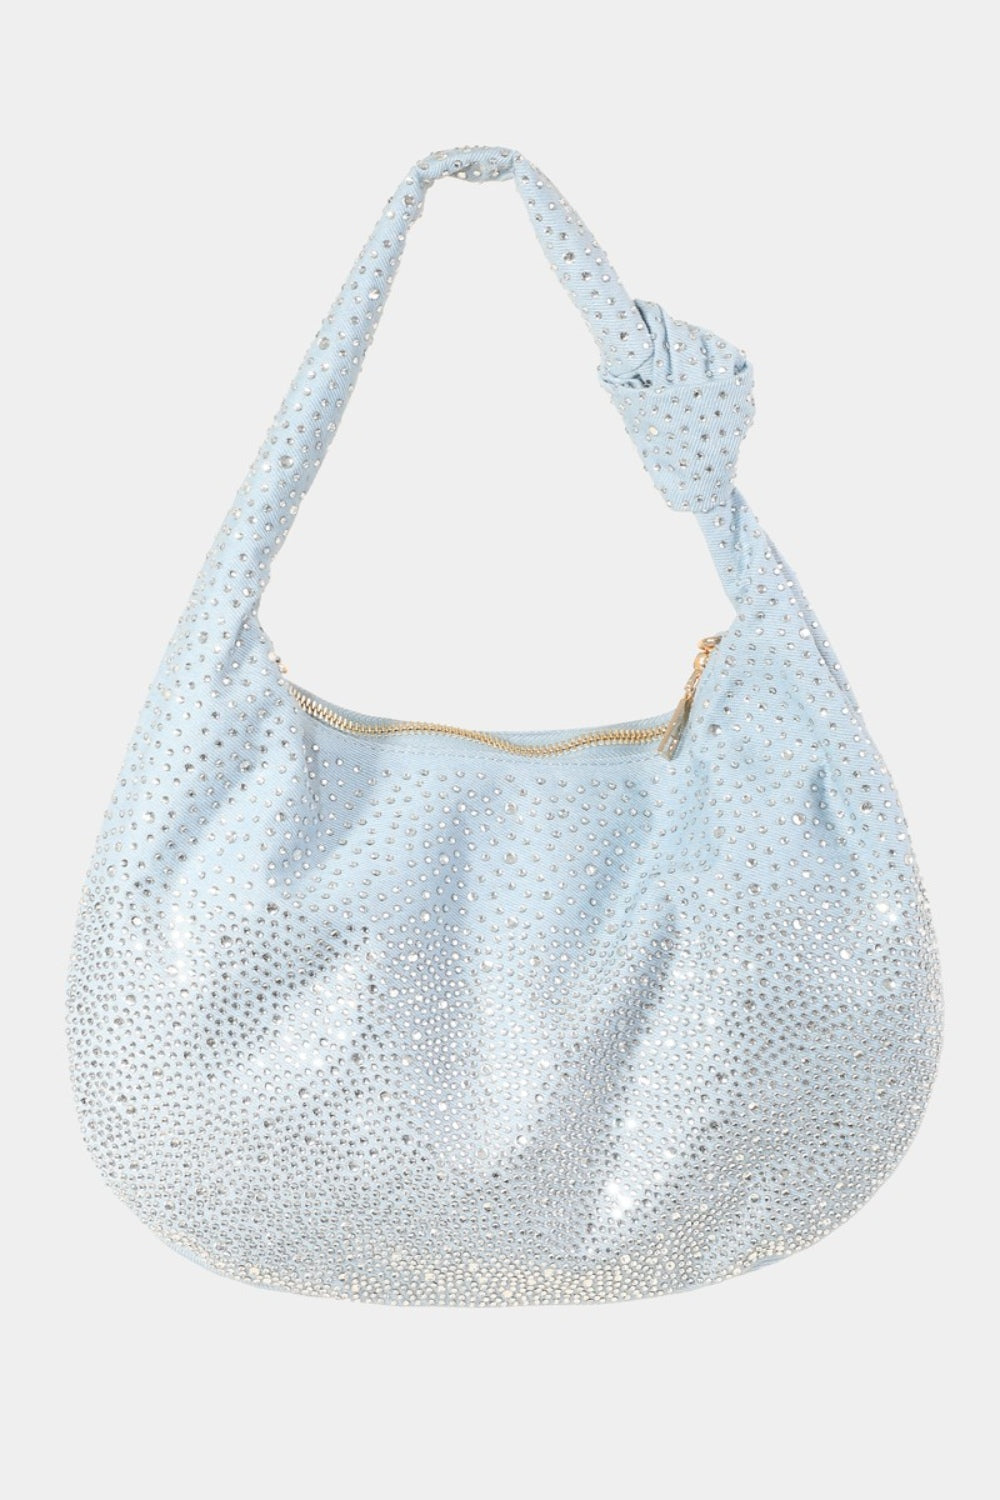 Fame Rhinestone Studded Handbag (5 Colors)